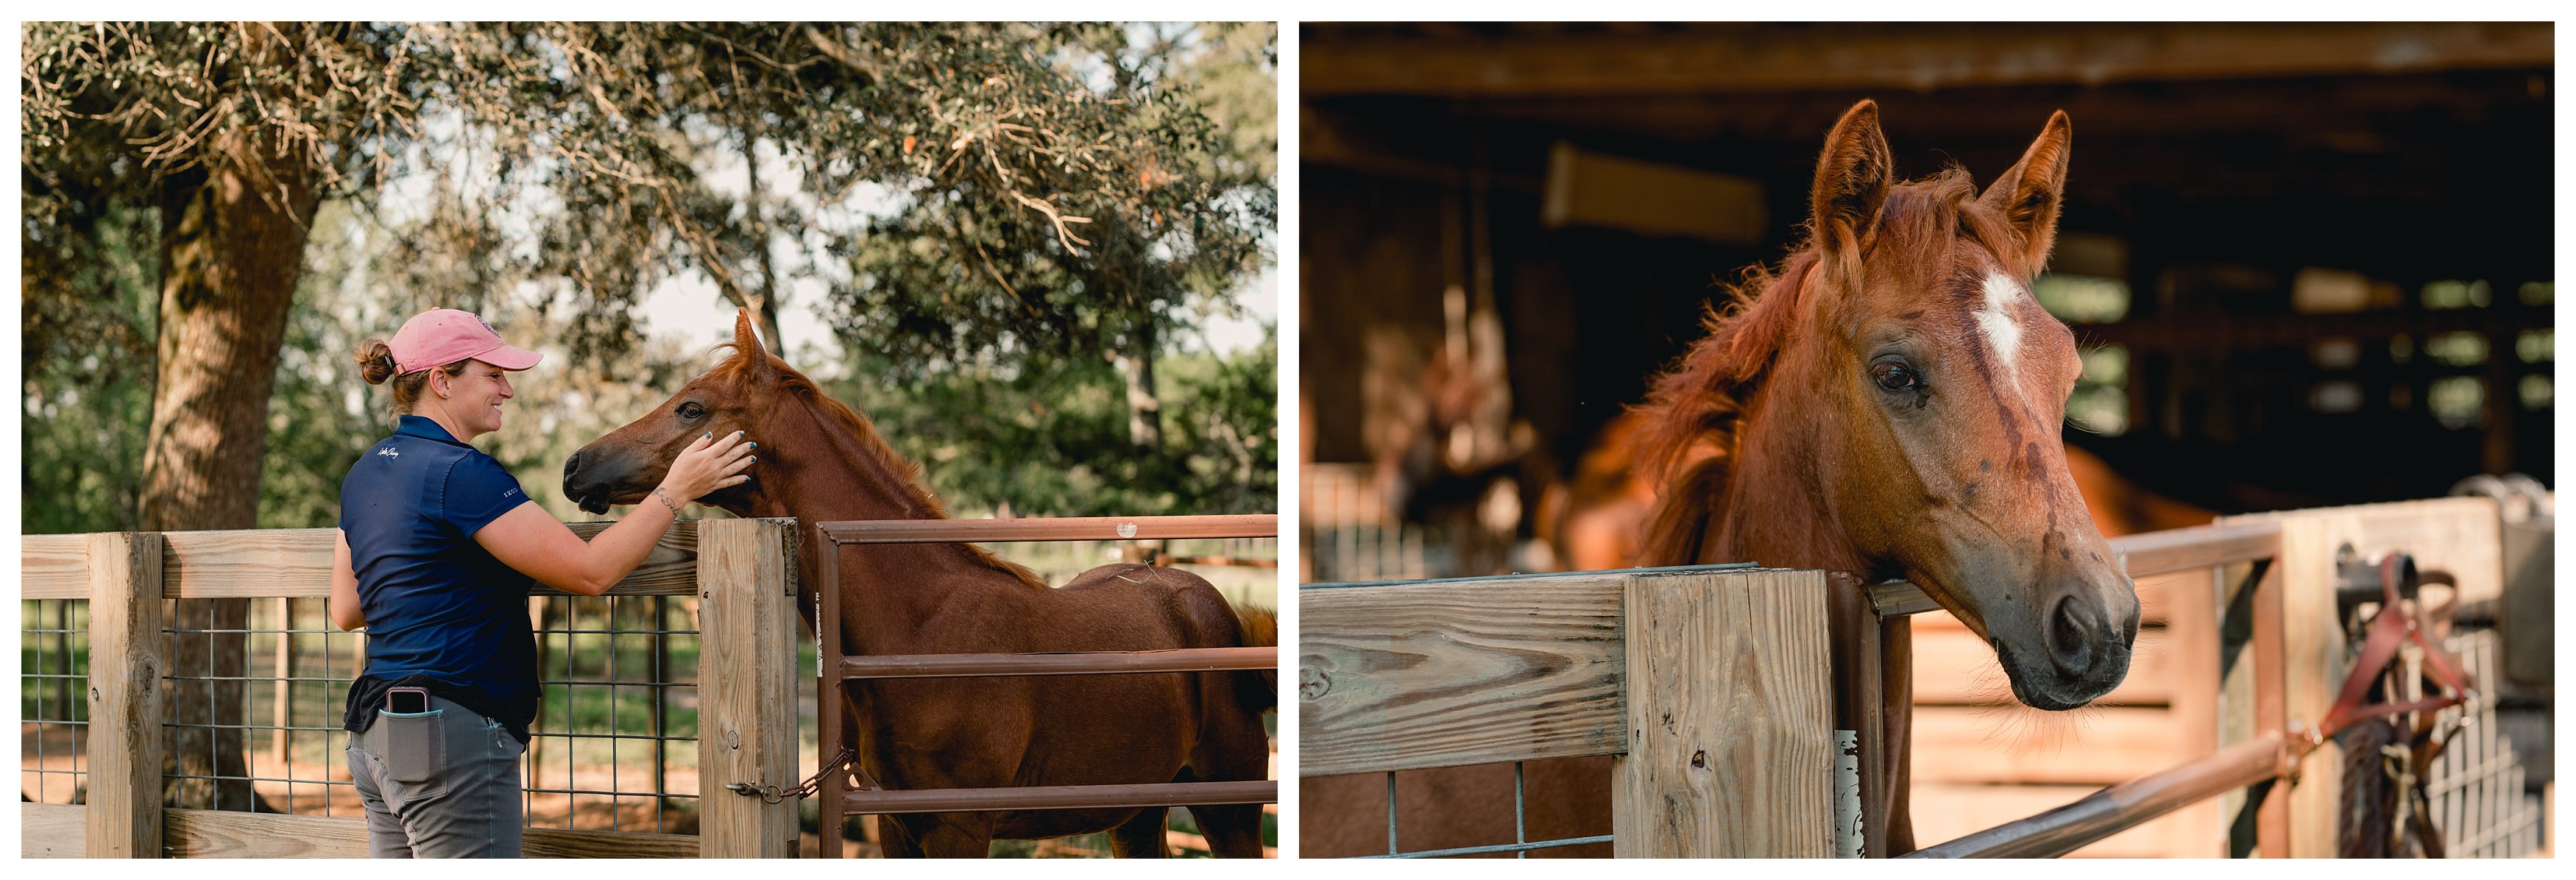 Trakehner horse breeding farm in Tallahassee, Florida. Iron Star Equestrian